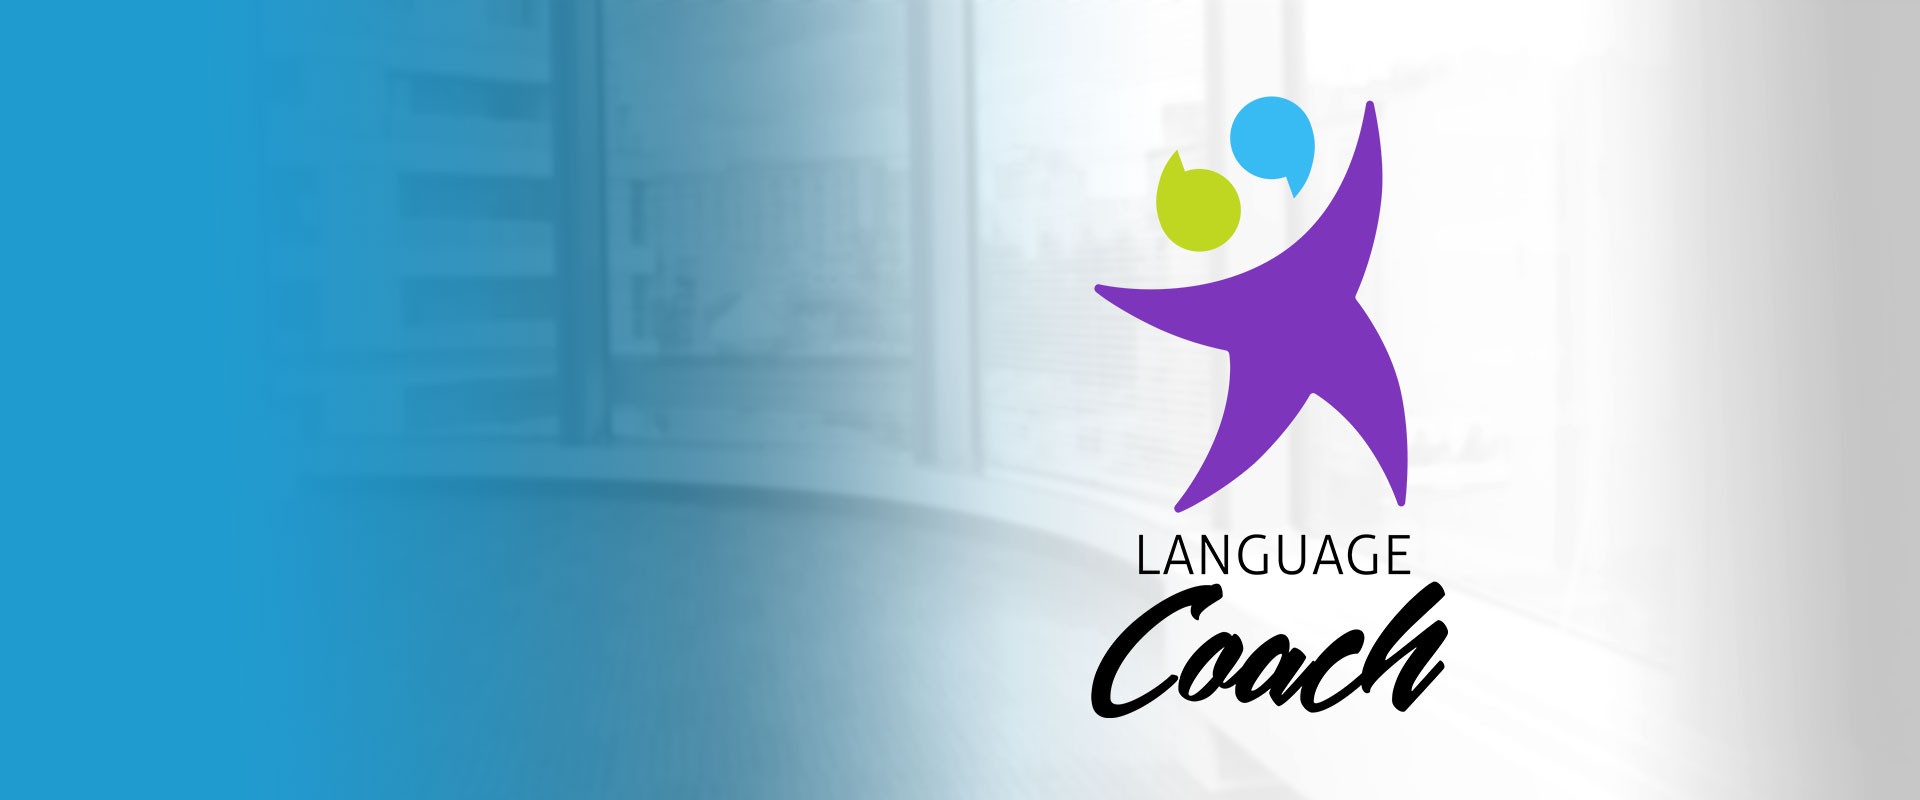 language-coach-banner-1